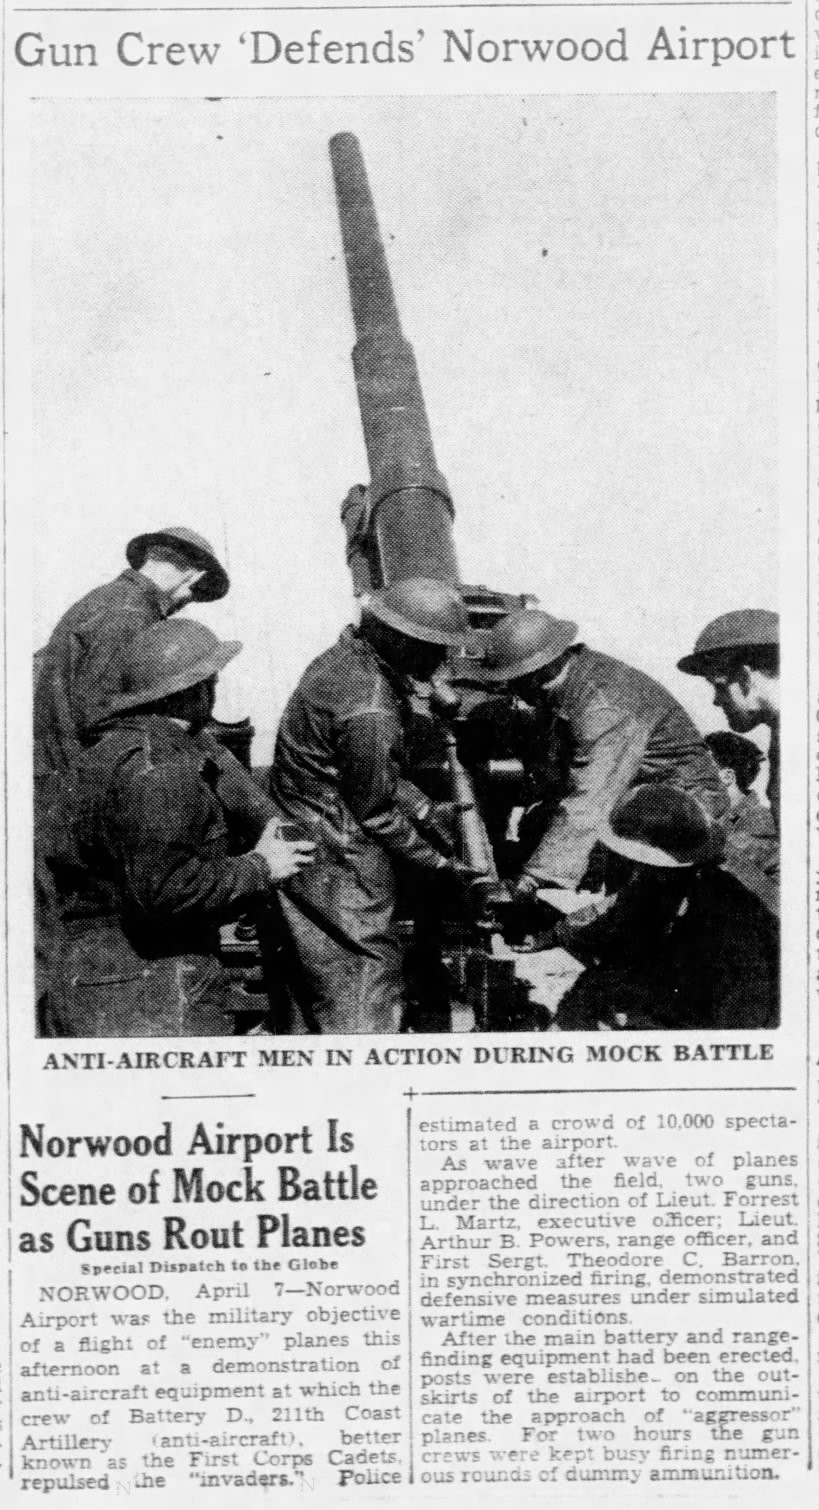 Gun Crew "Defends" Norwood Airport